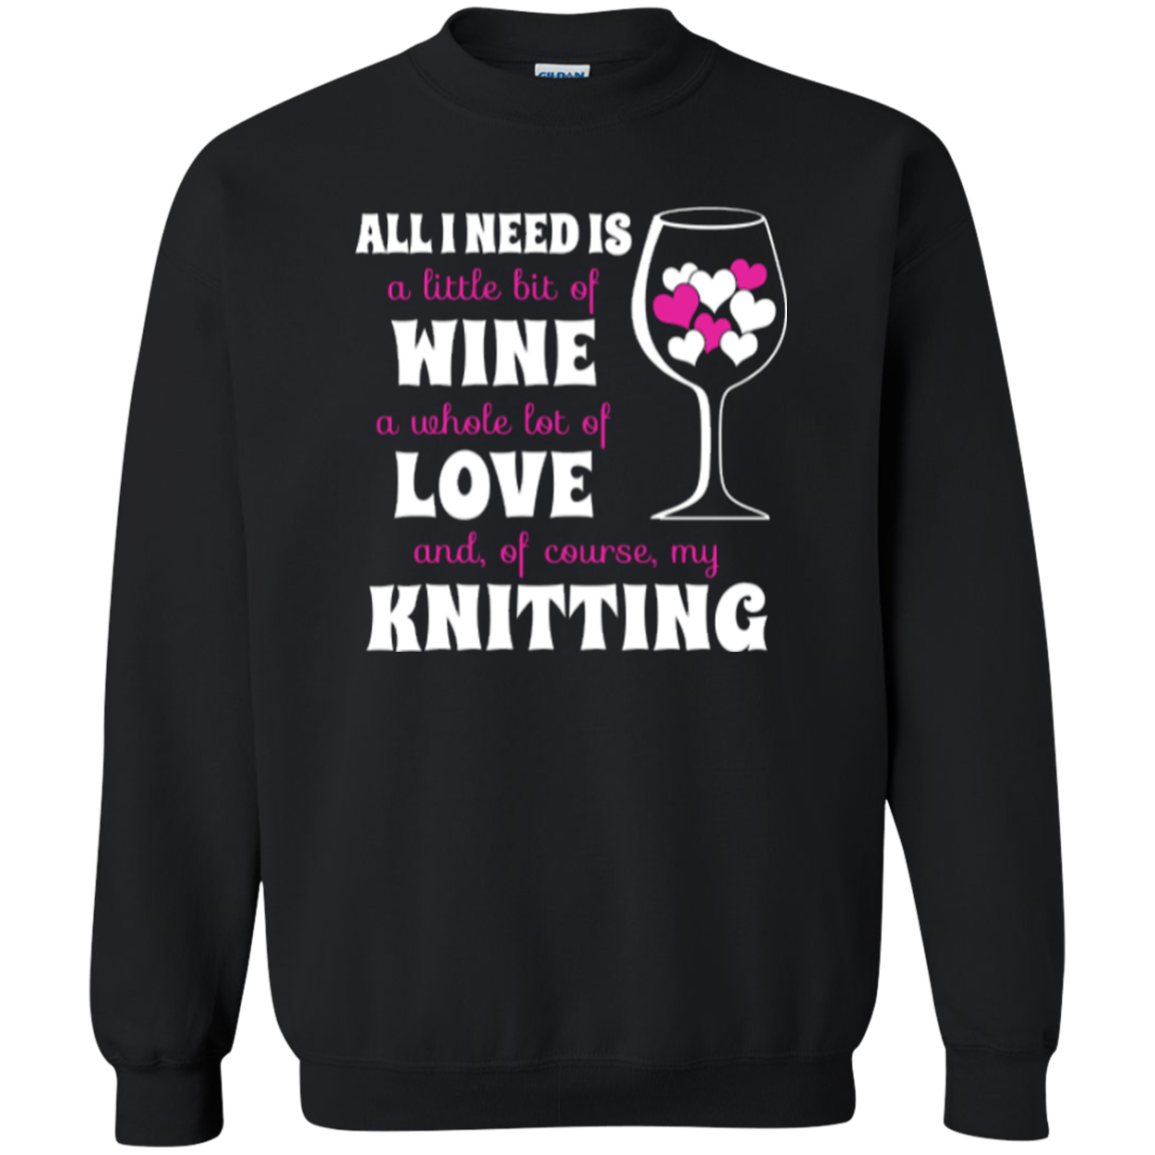 All I Need is Wine-Love-Knitting Crewneck Sweatshirt - Crafter4Life - 2